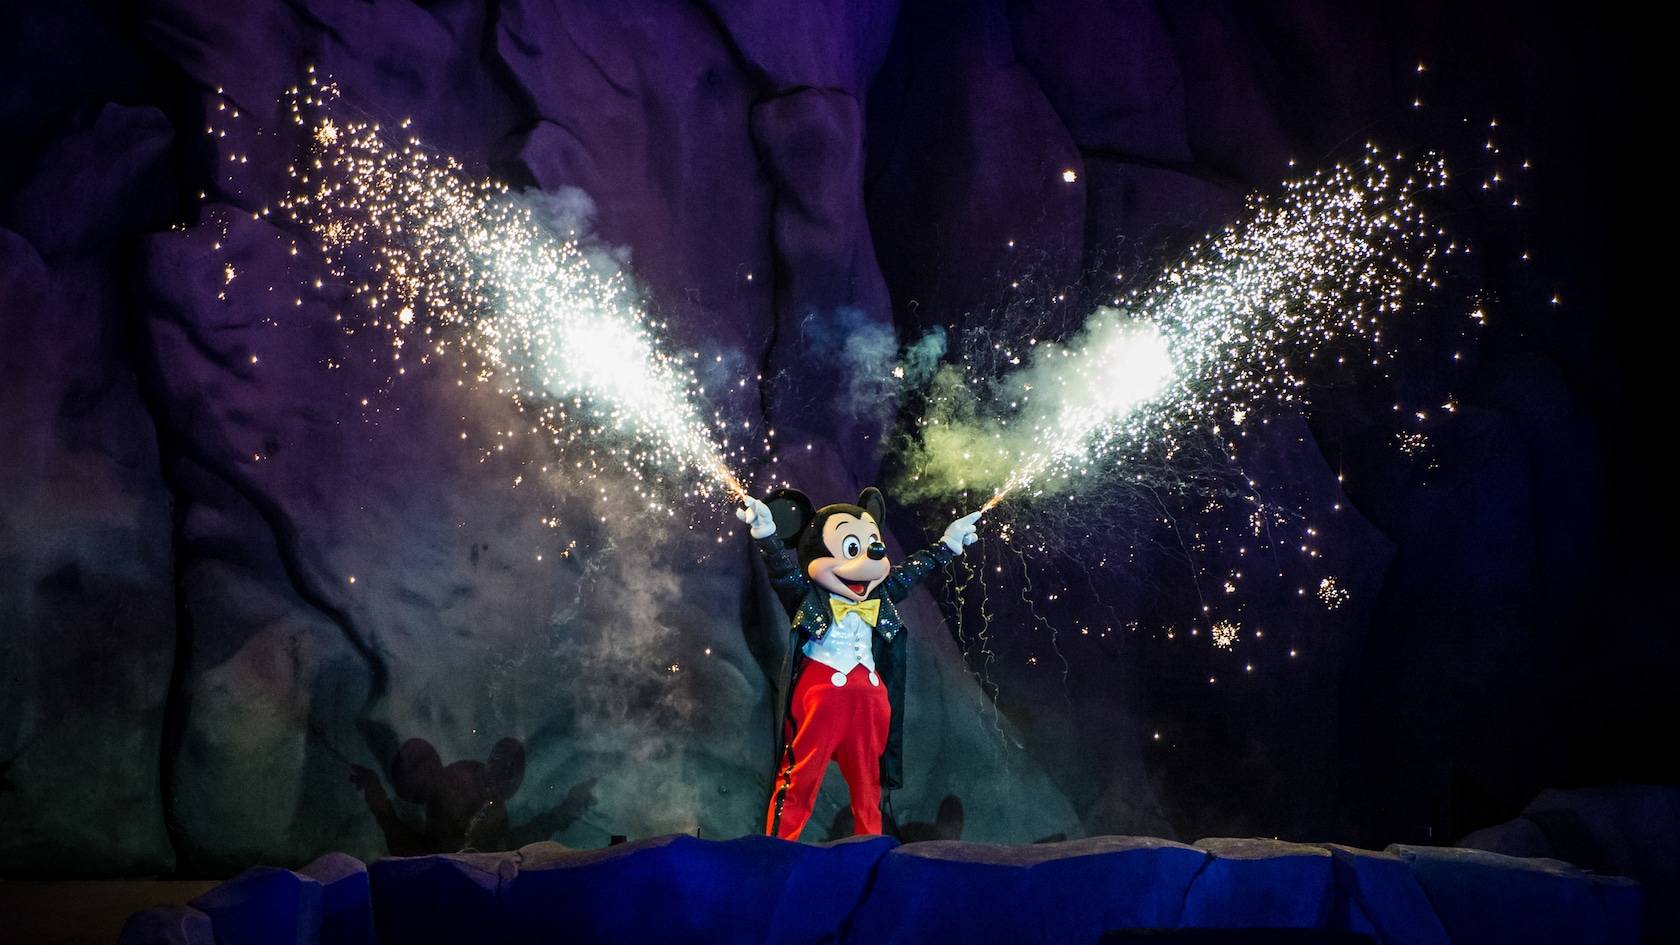 Fantasmic! returns to Disney's Hollywood Studios in 2022